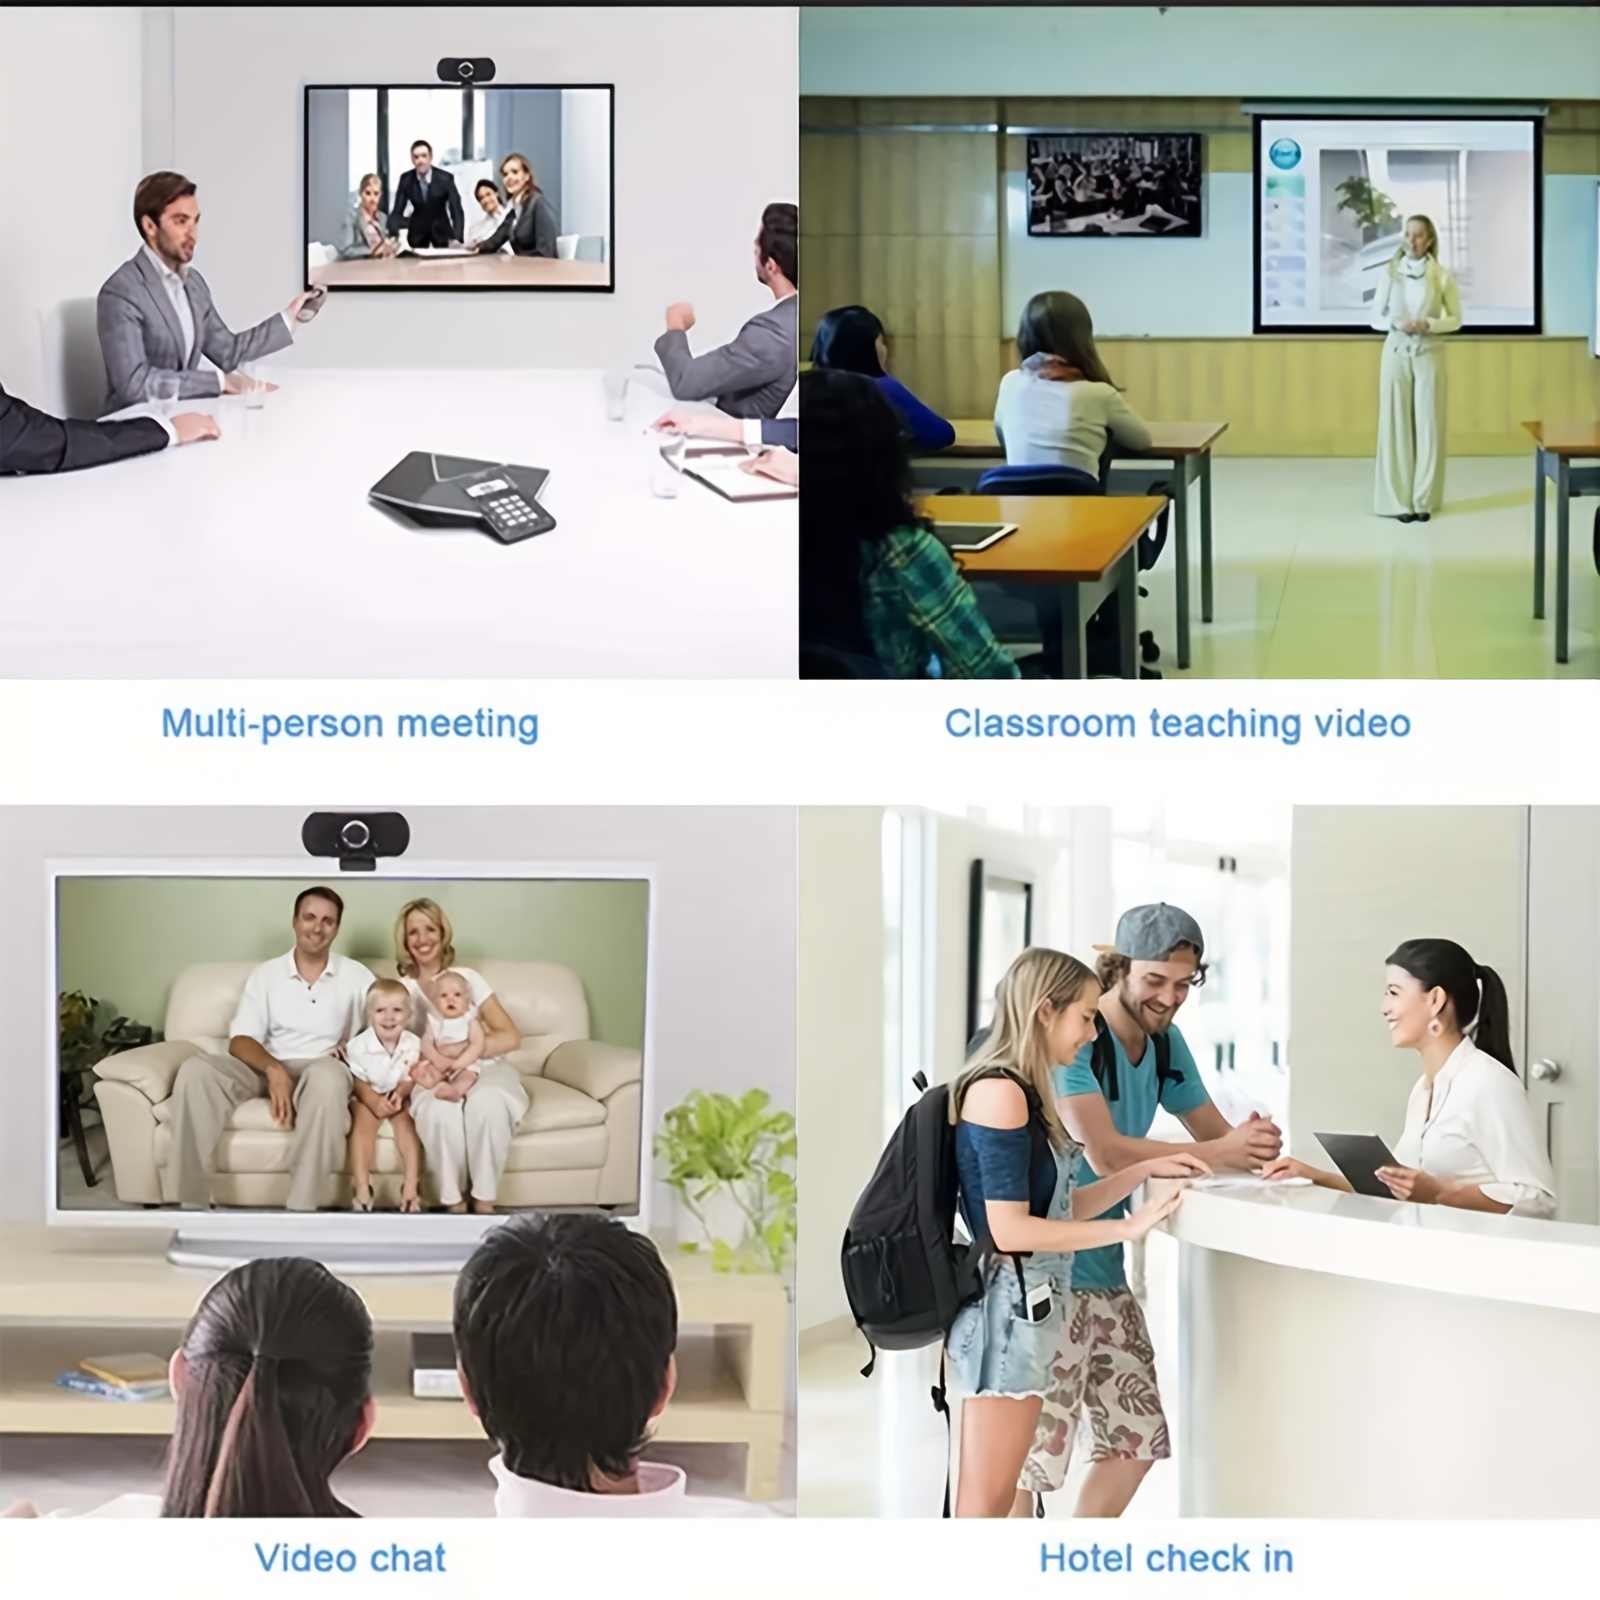 Hd 1080p Usb Webcam Ip Camera With Microphone Afgvk Smart - Temu